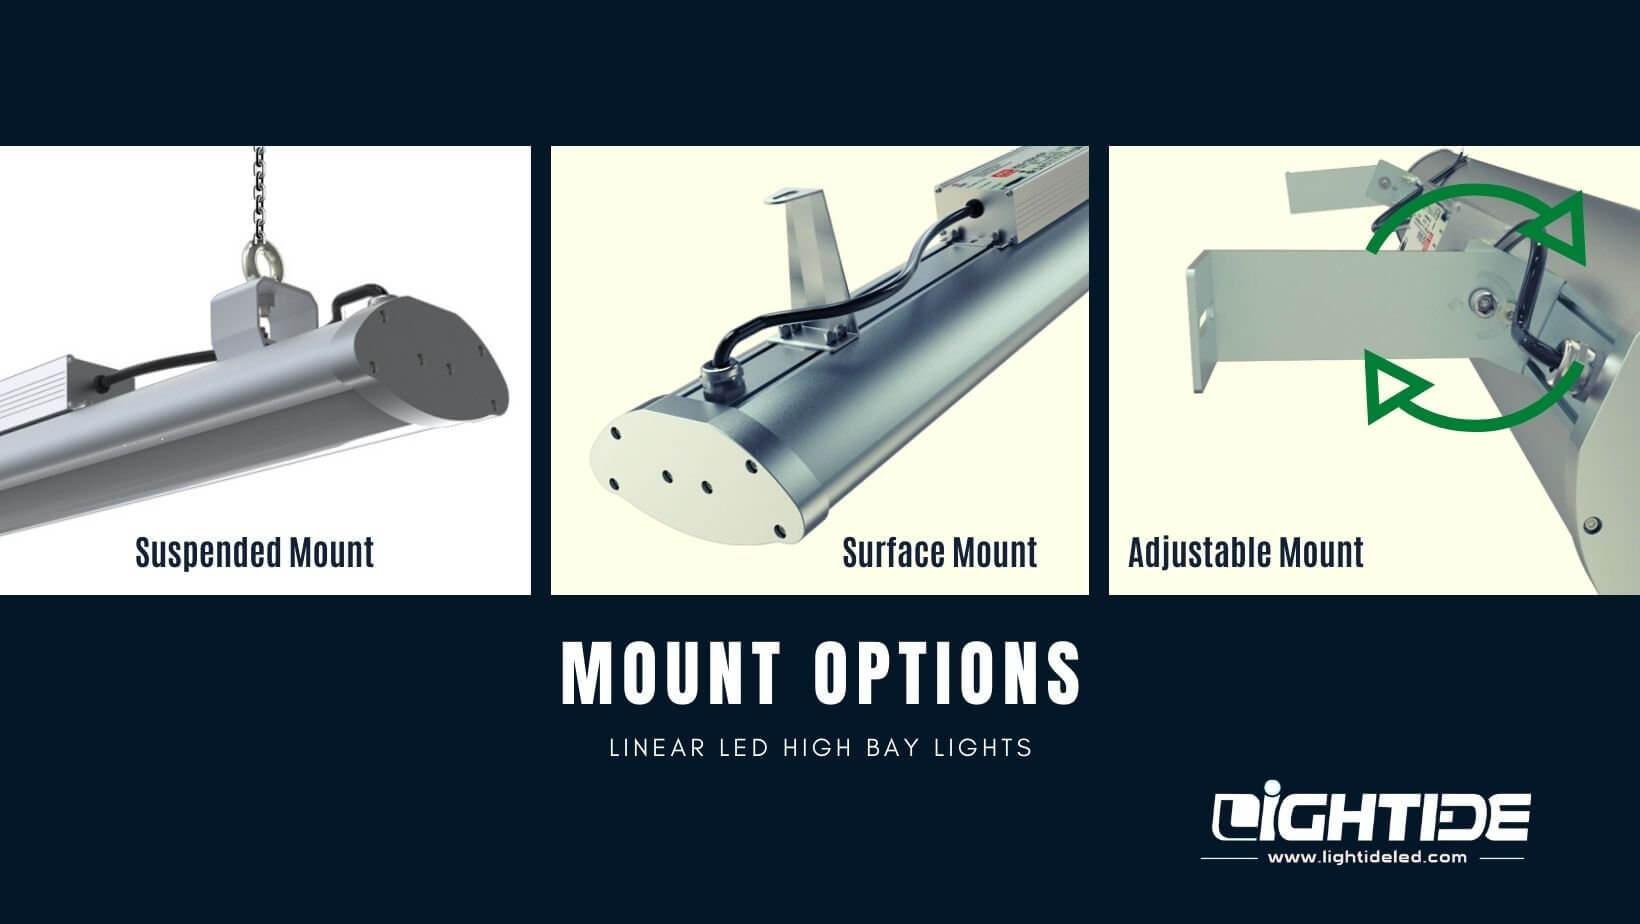 Lightide mount options for led high bay light fixtures